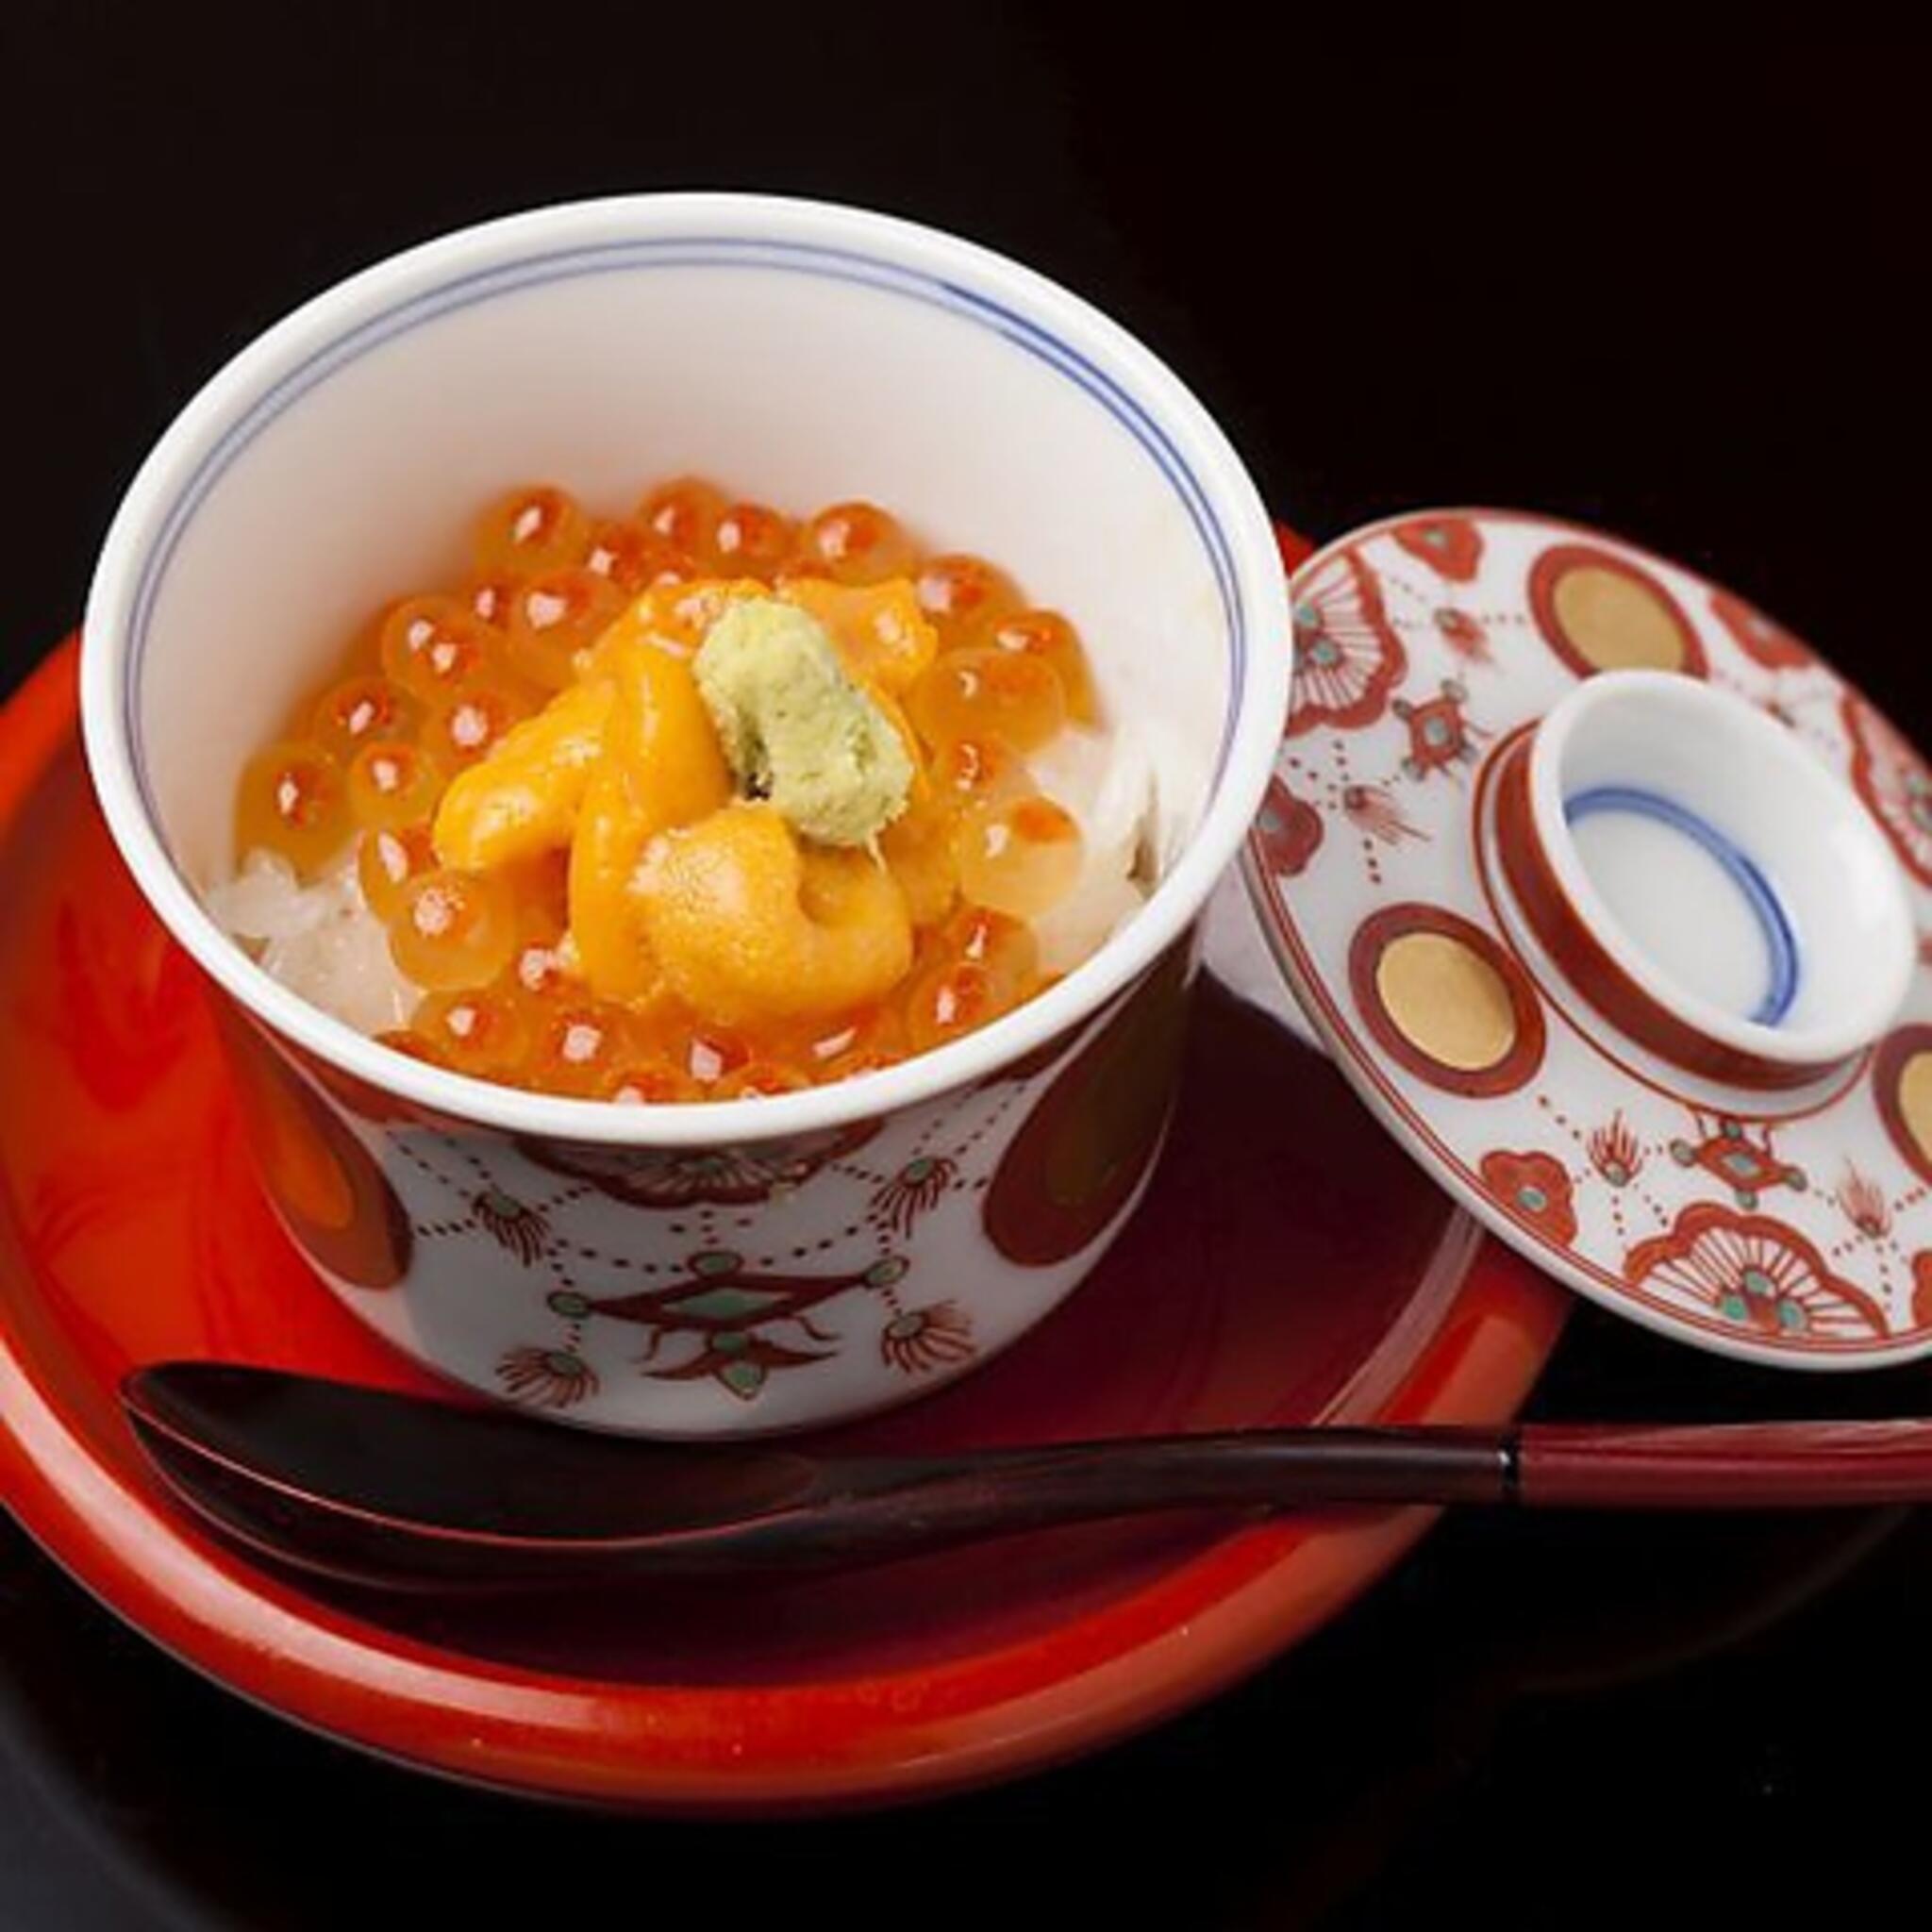 日本料理 銀座 朱雀の代表写真1